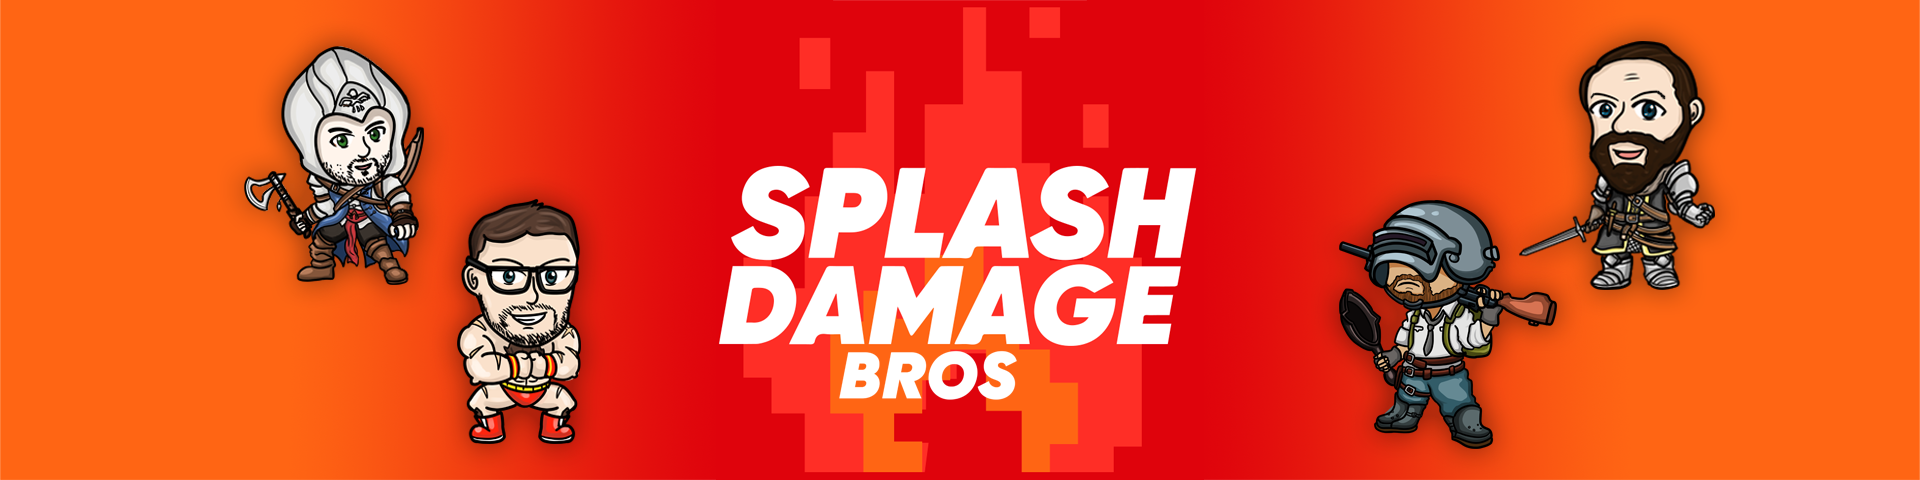 Splash Damage Bros